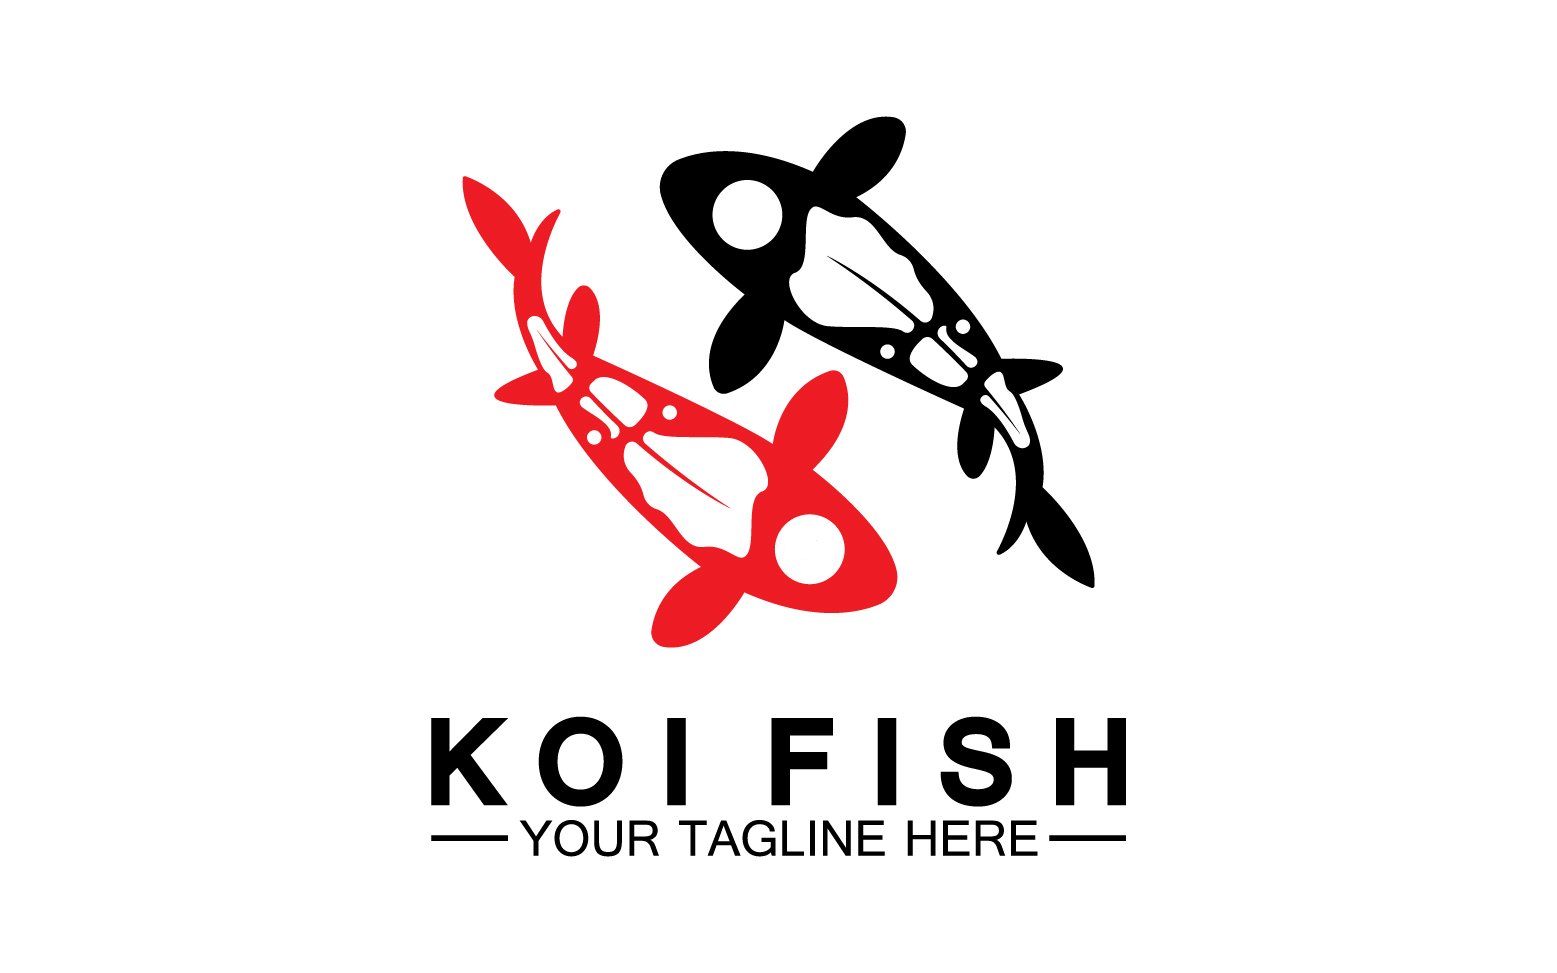 Fish koi black and red icon logo vector v19